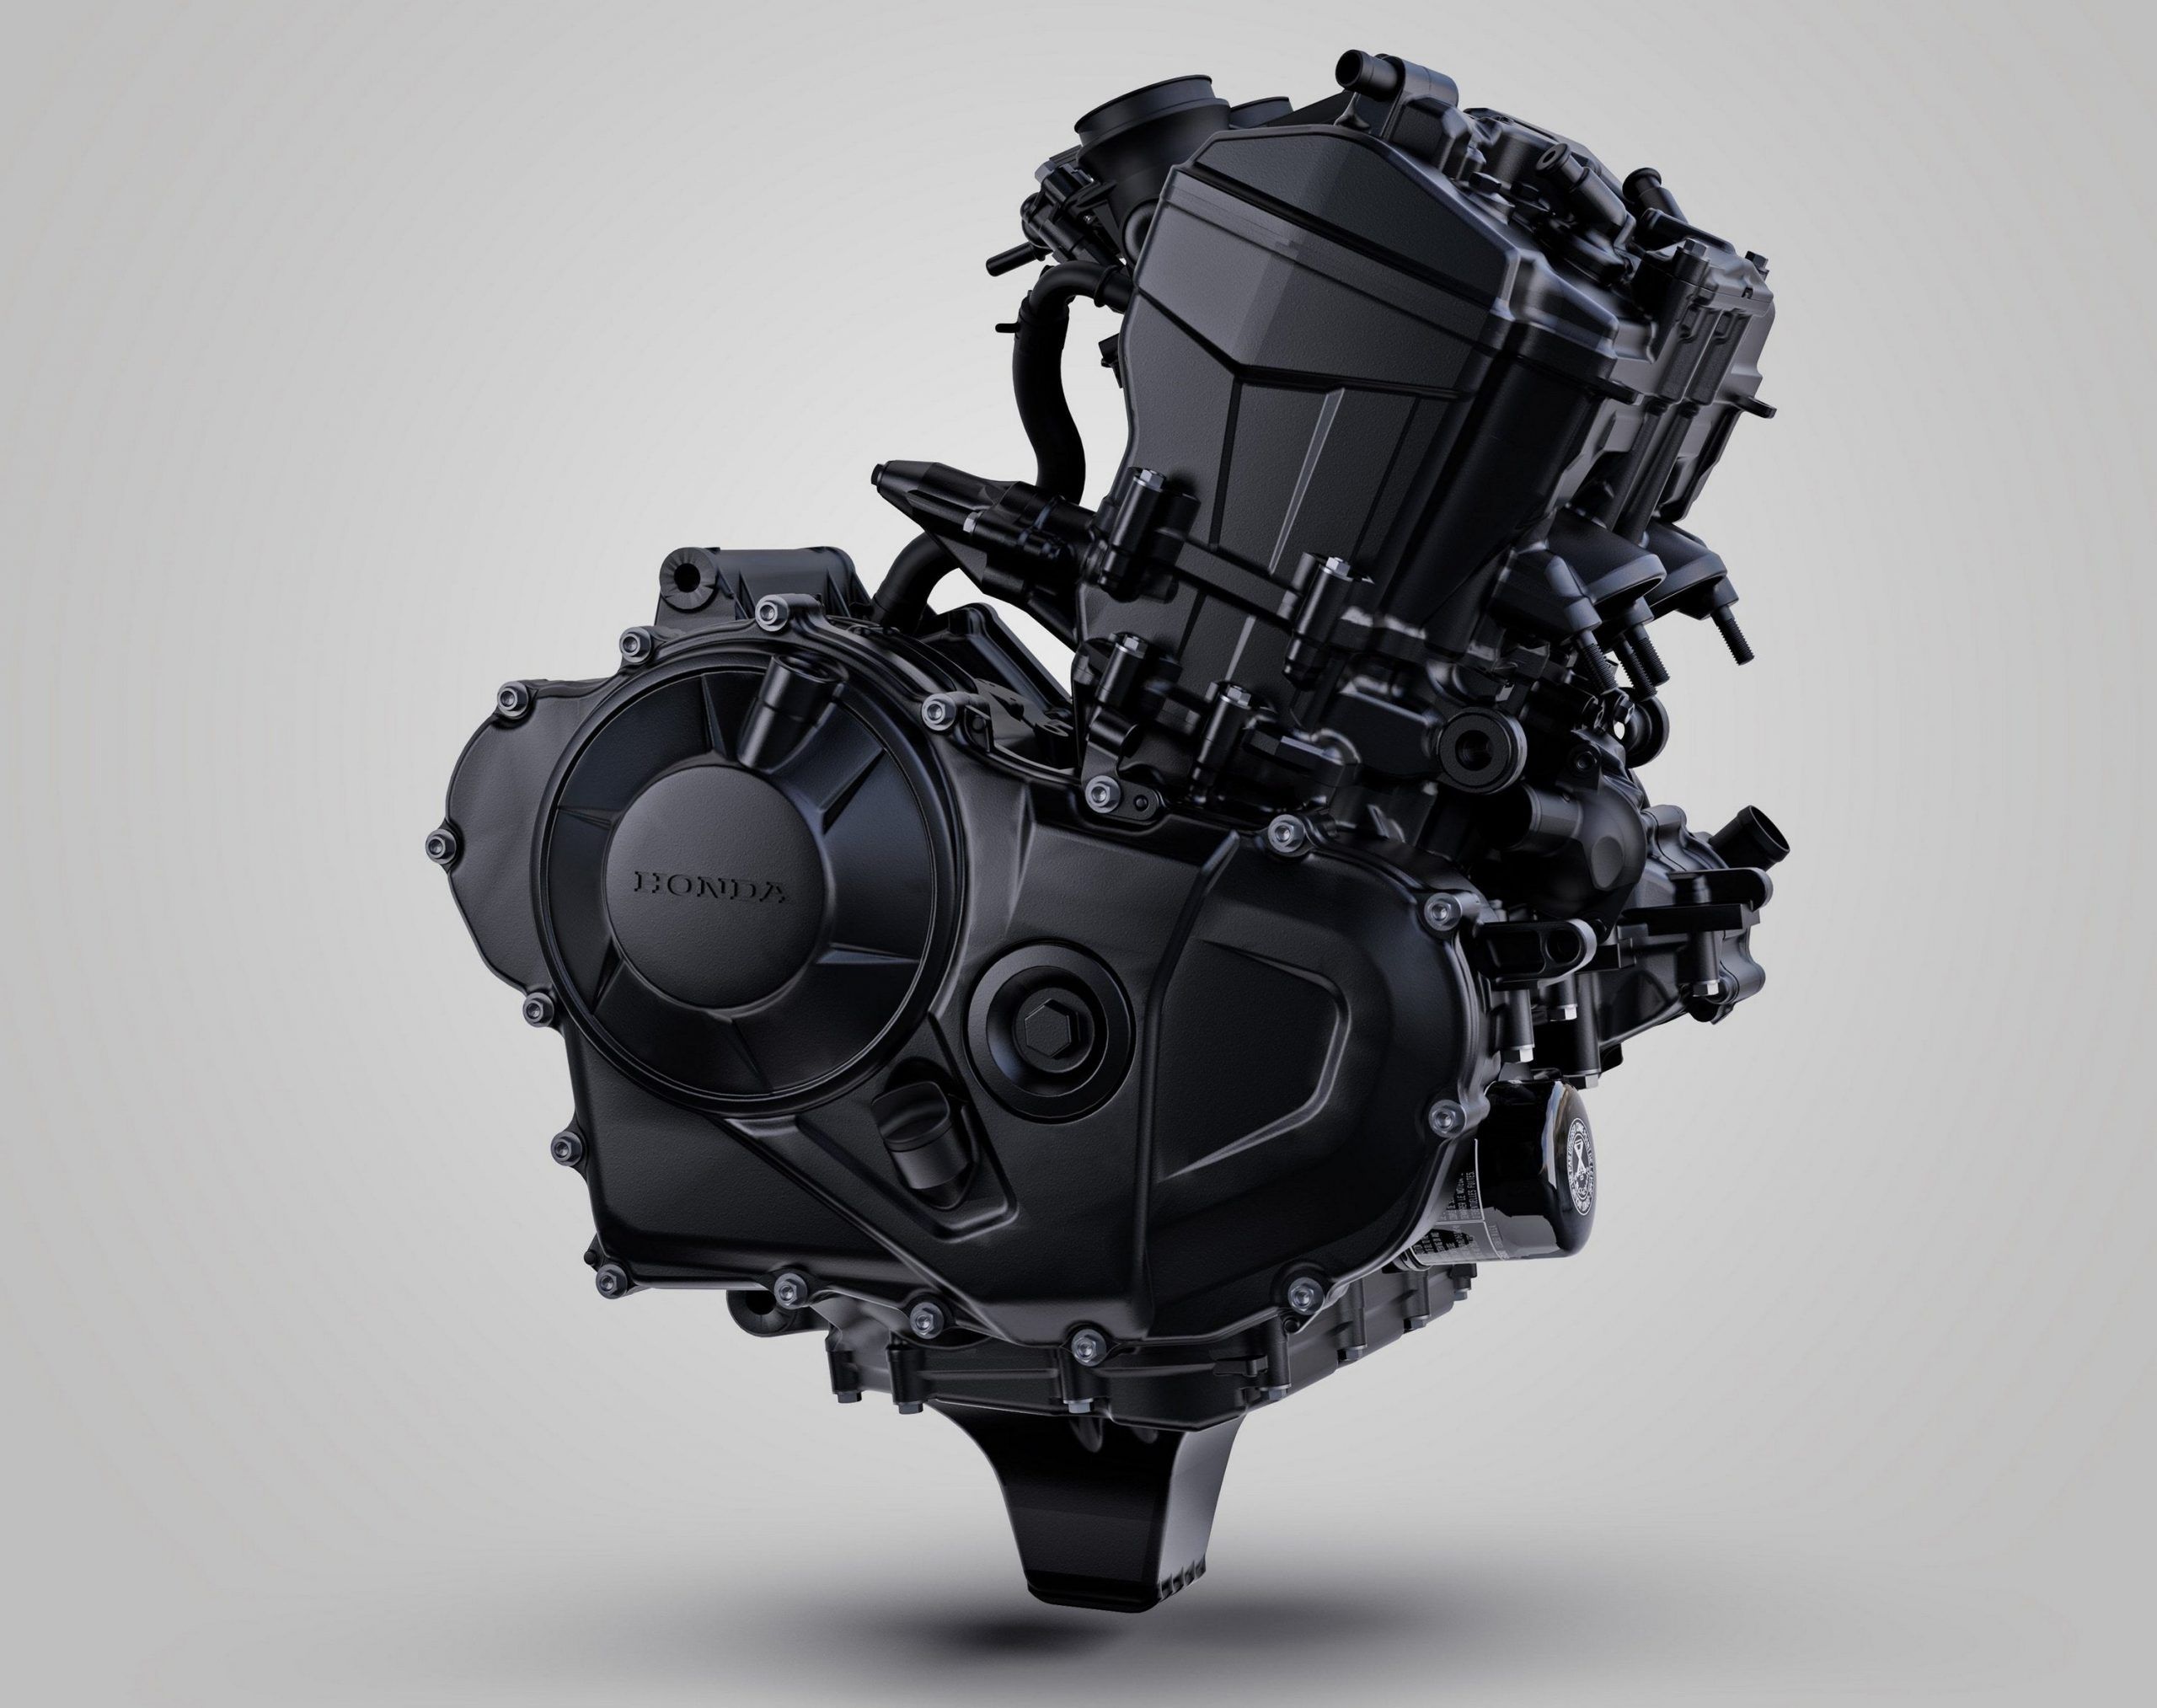 Honda CB750 Hornet Engine